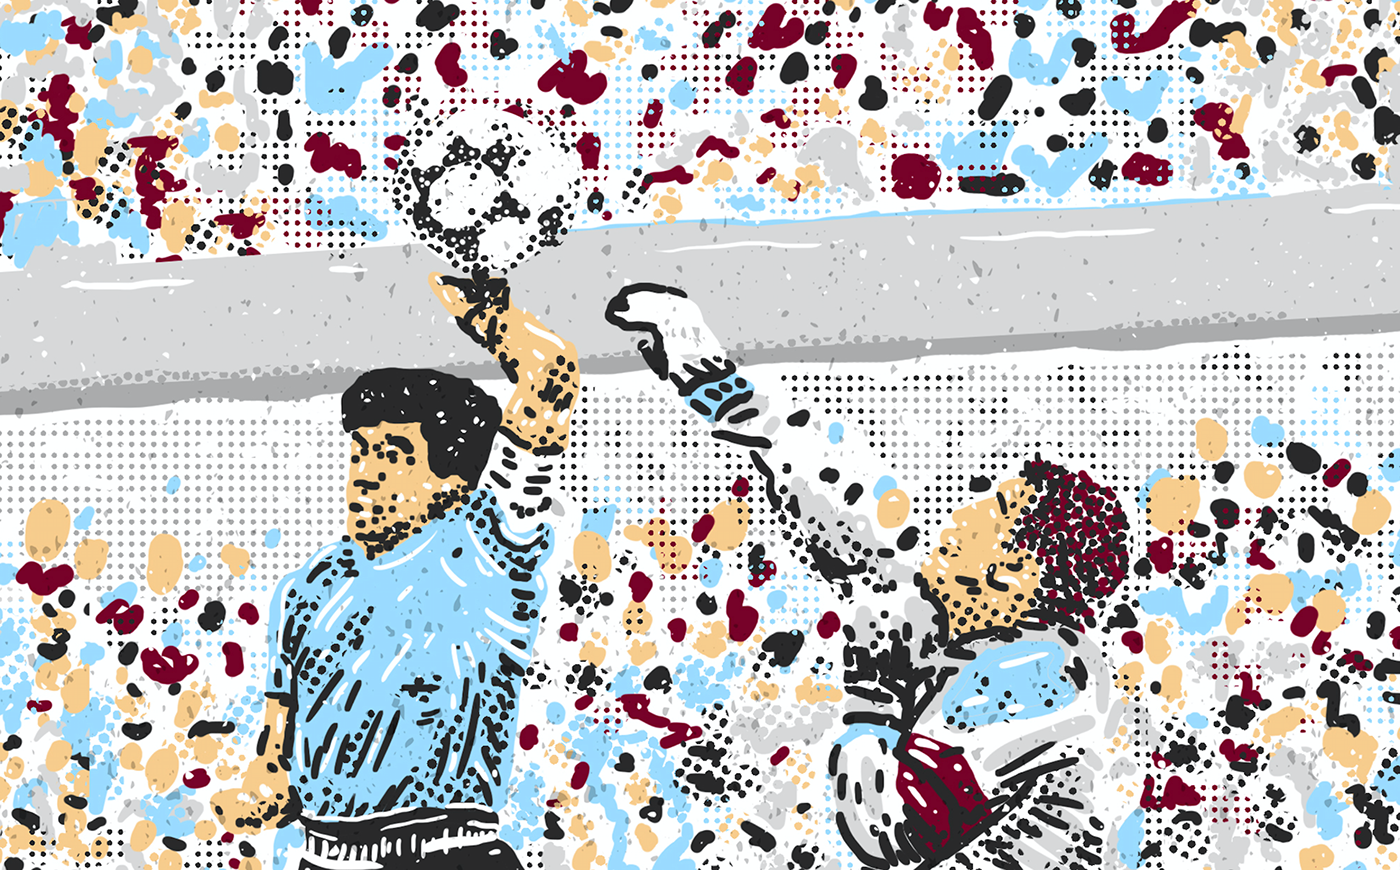 #Futbol #Football #soccer #Design #illustration #halftone #maradona #sports #deporte